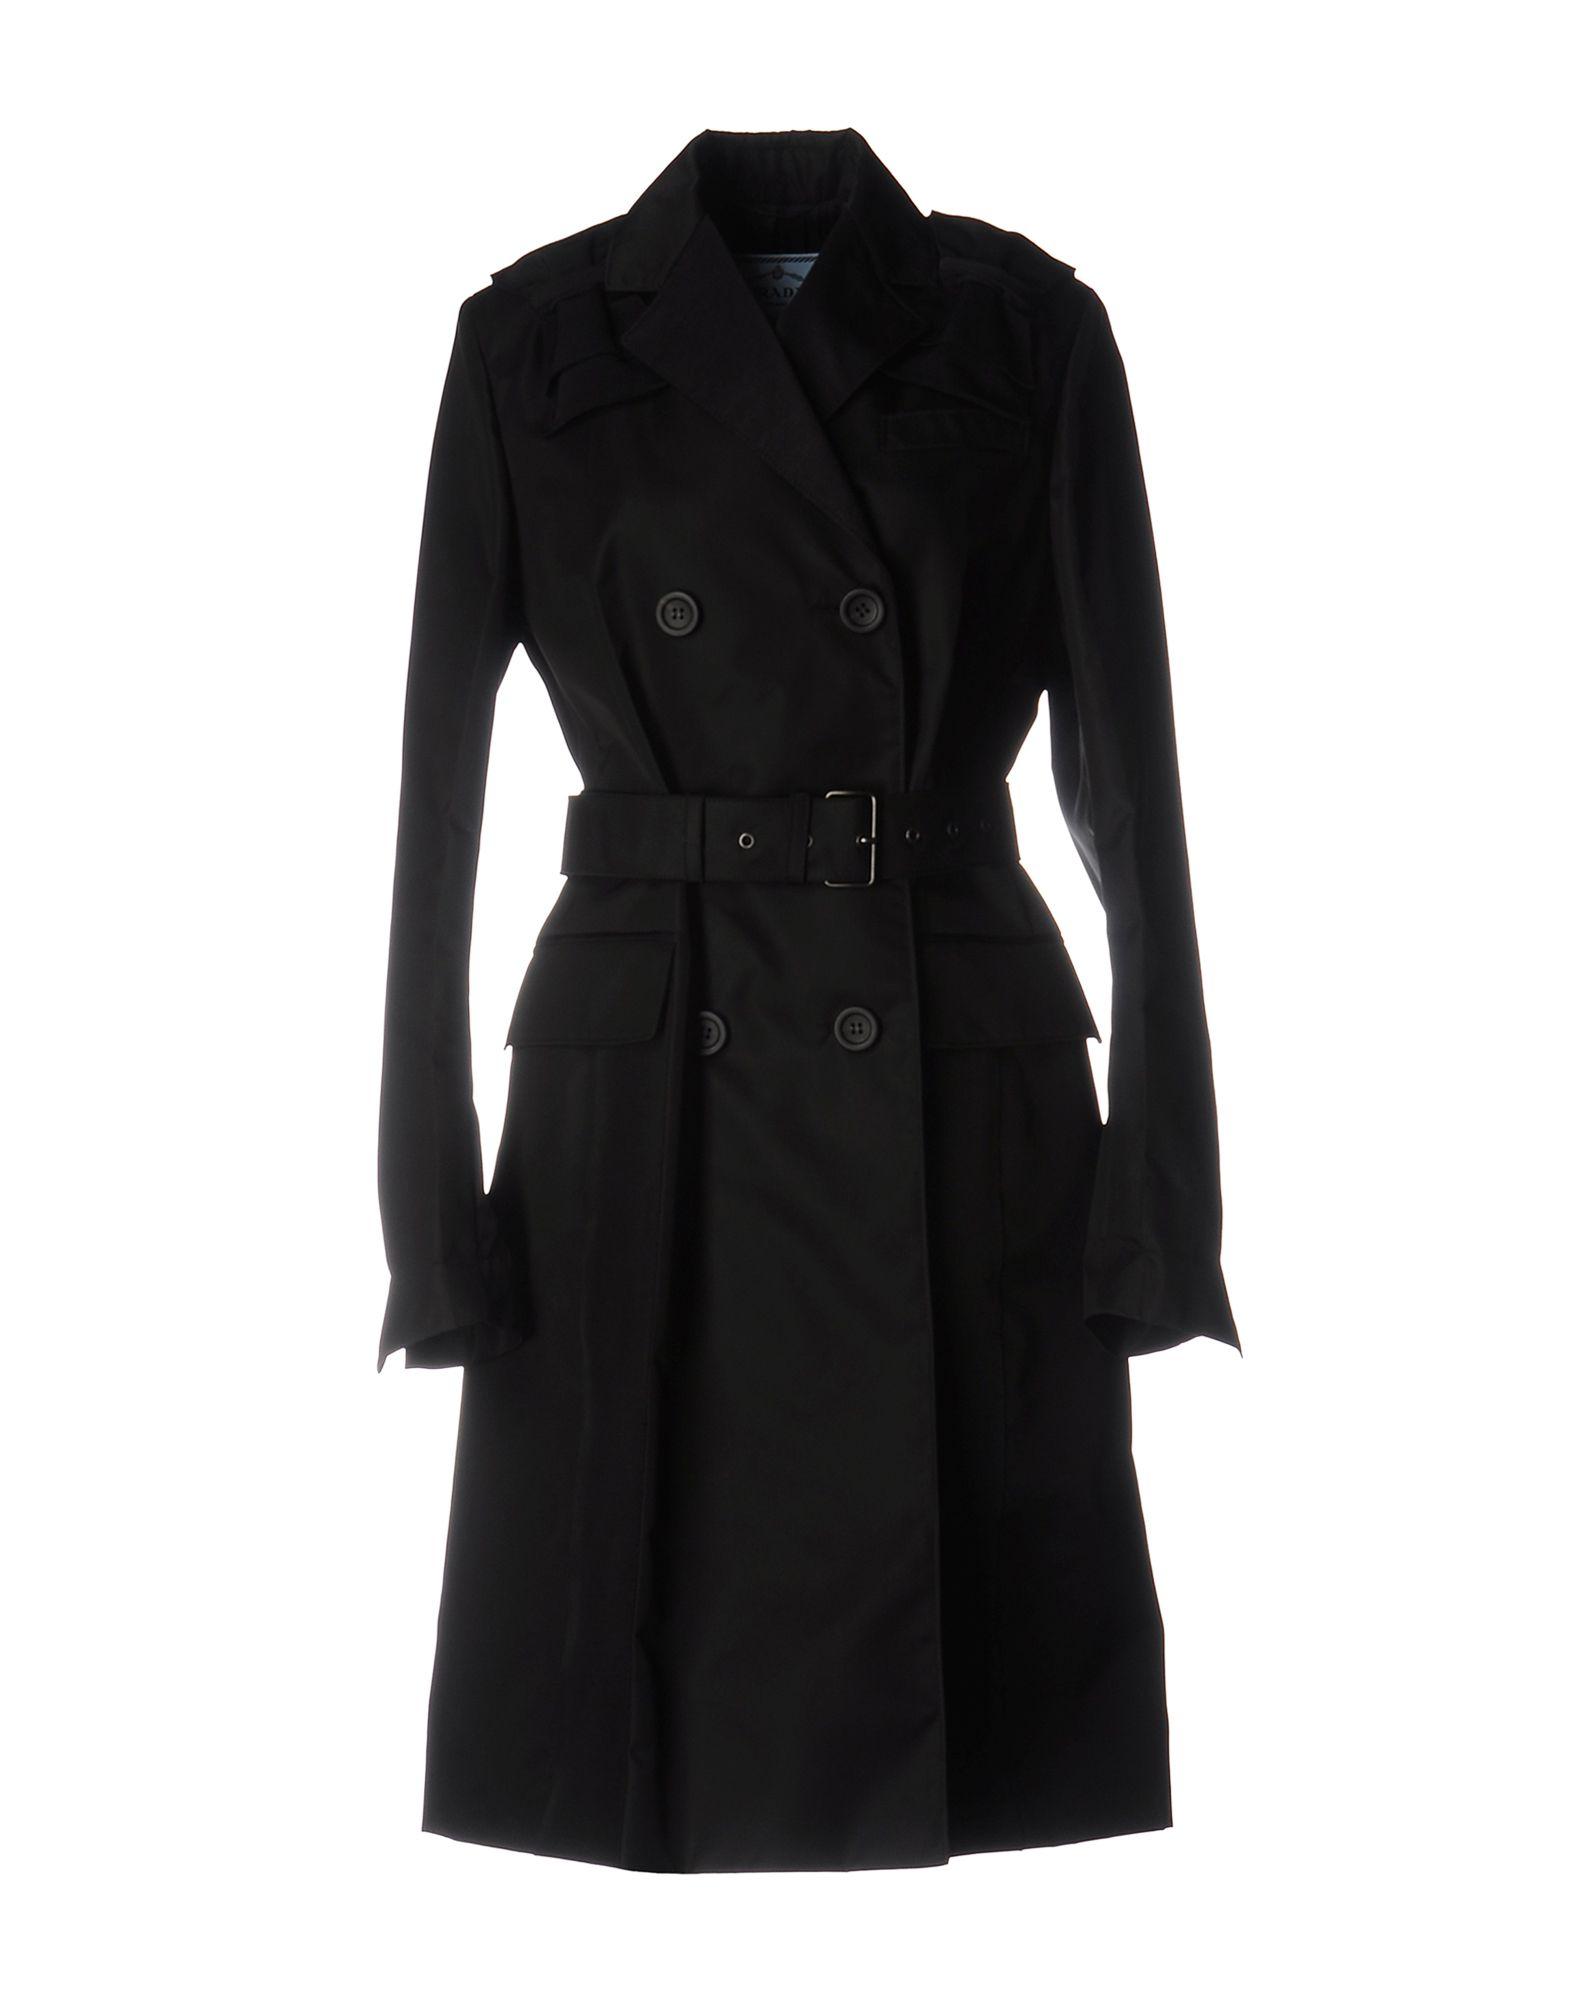 Lyst - Prada Coat in Black